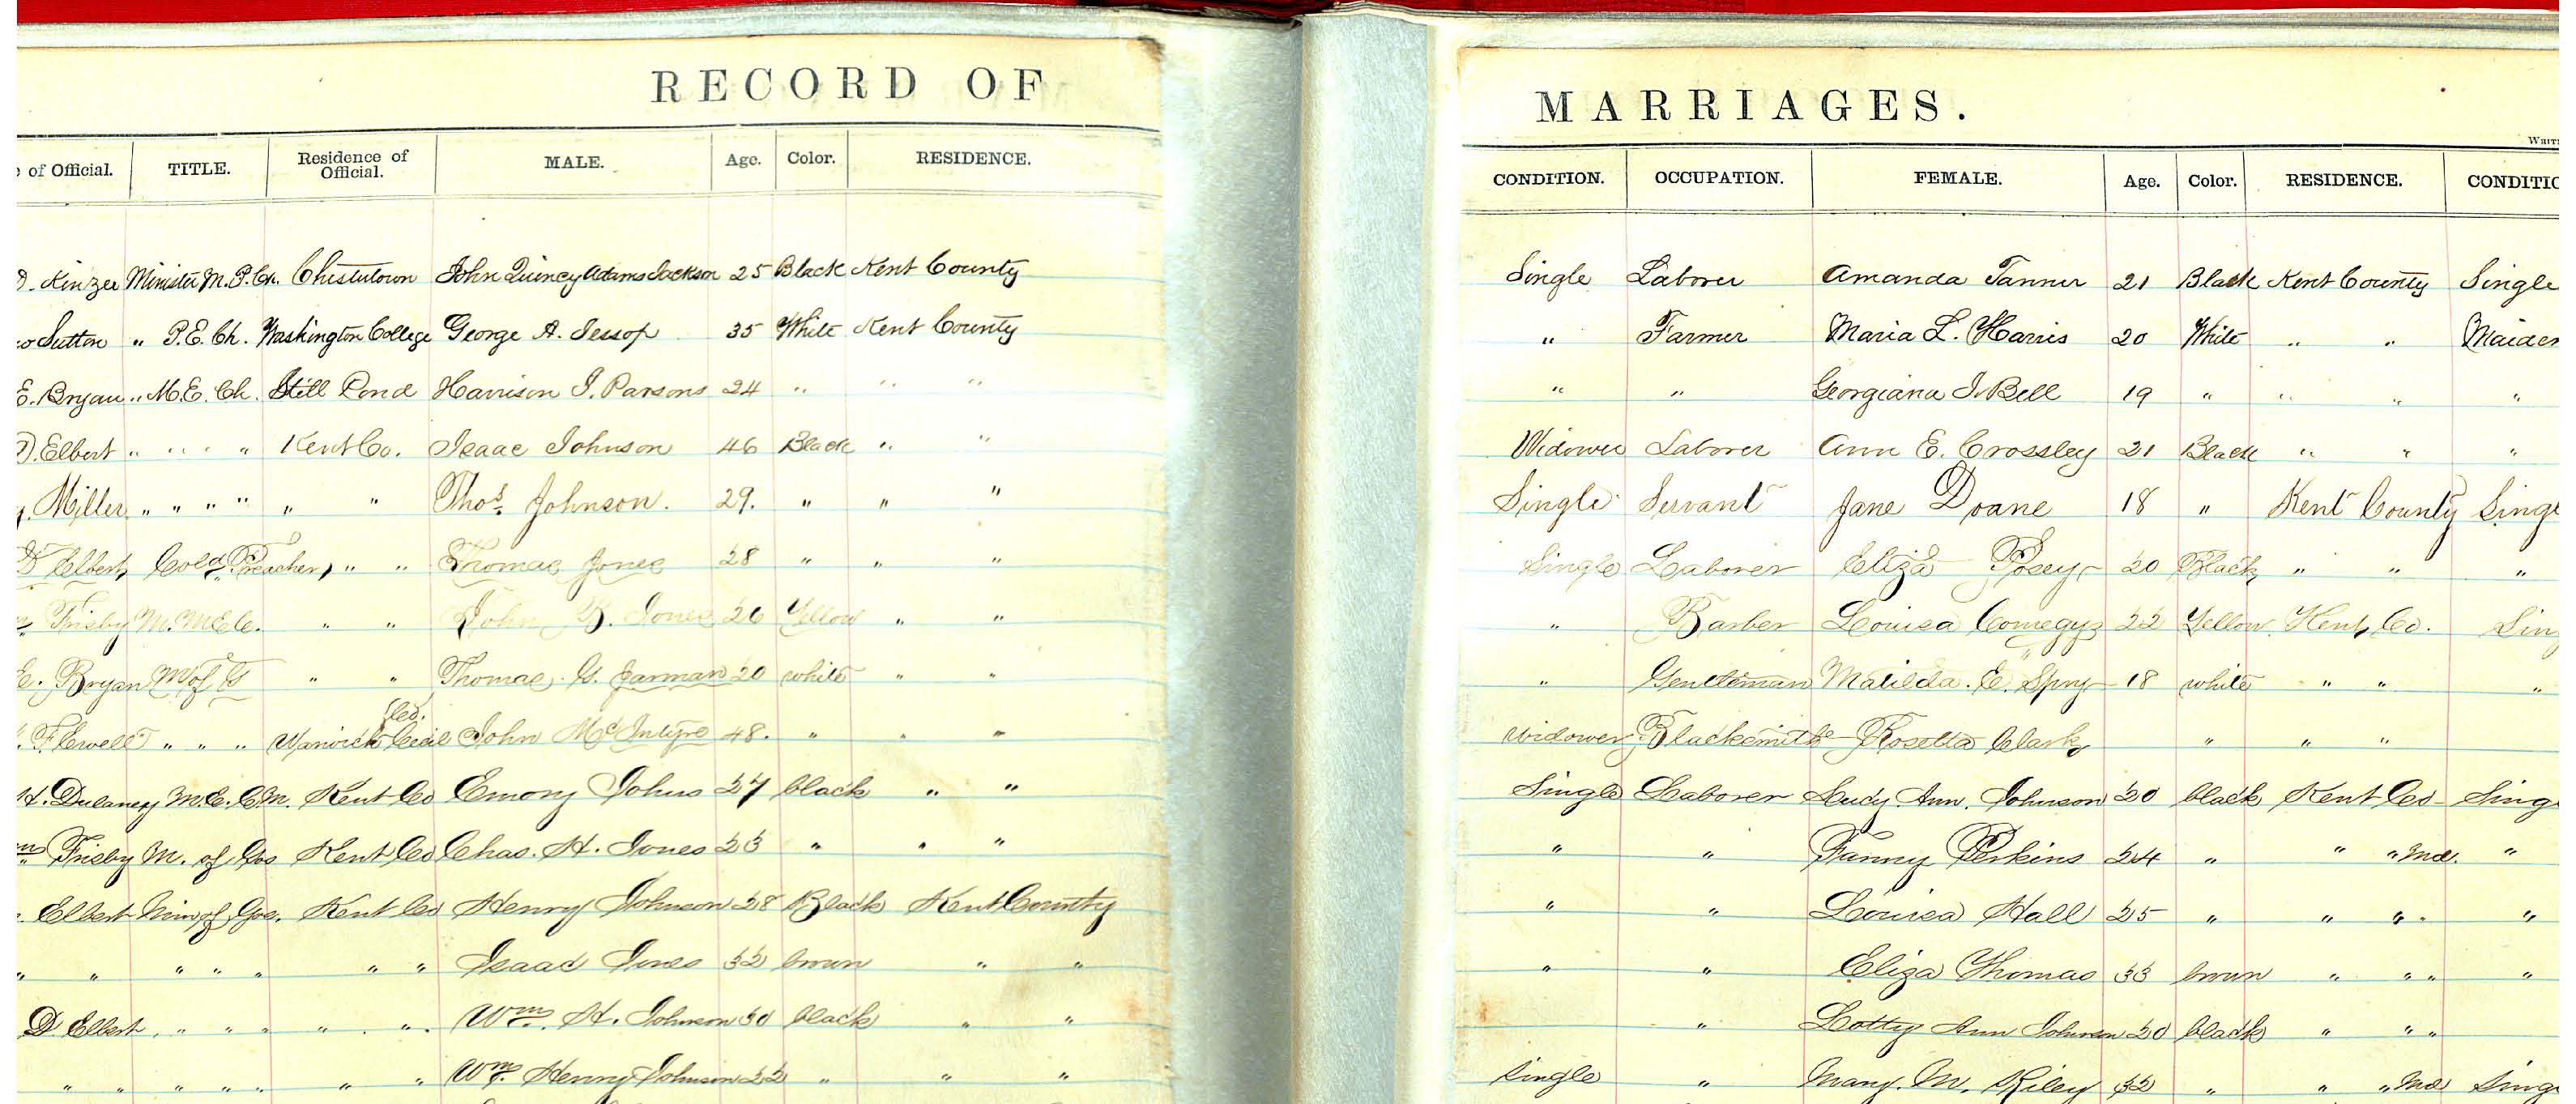 Isaac S. Jones Marriage Record